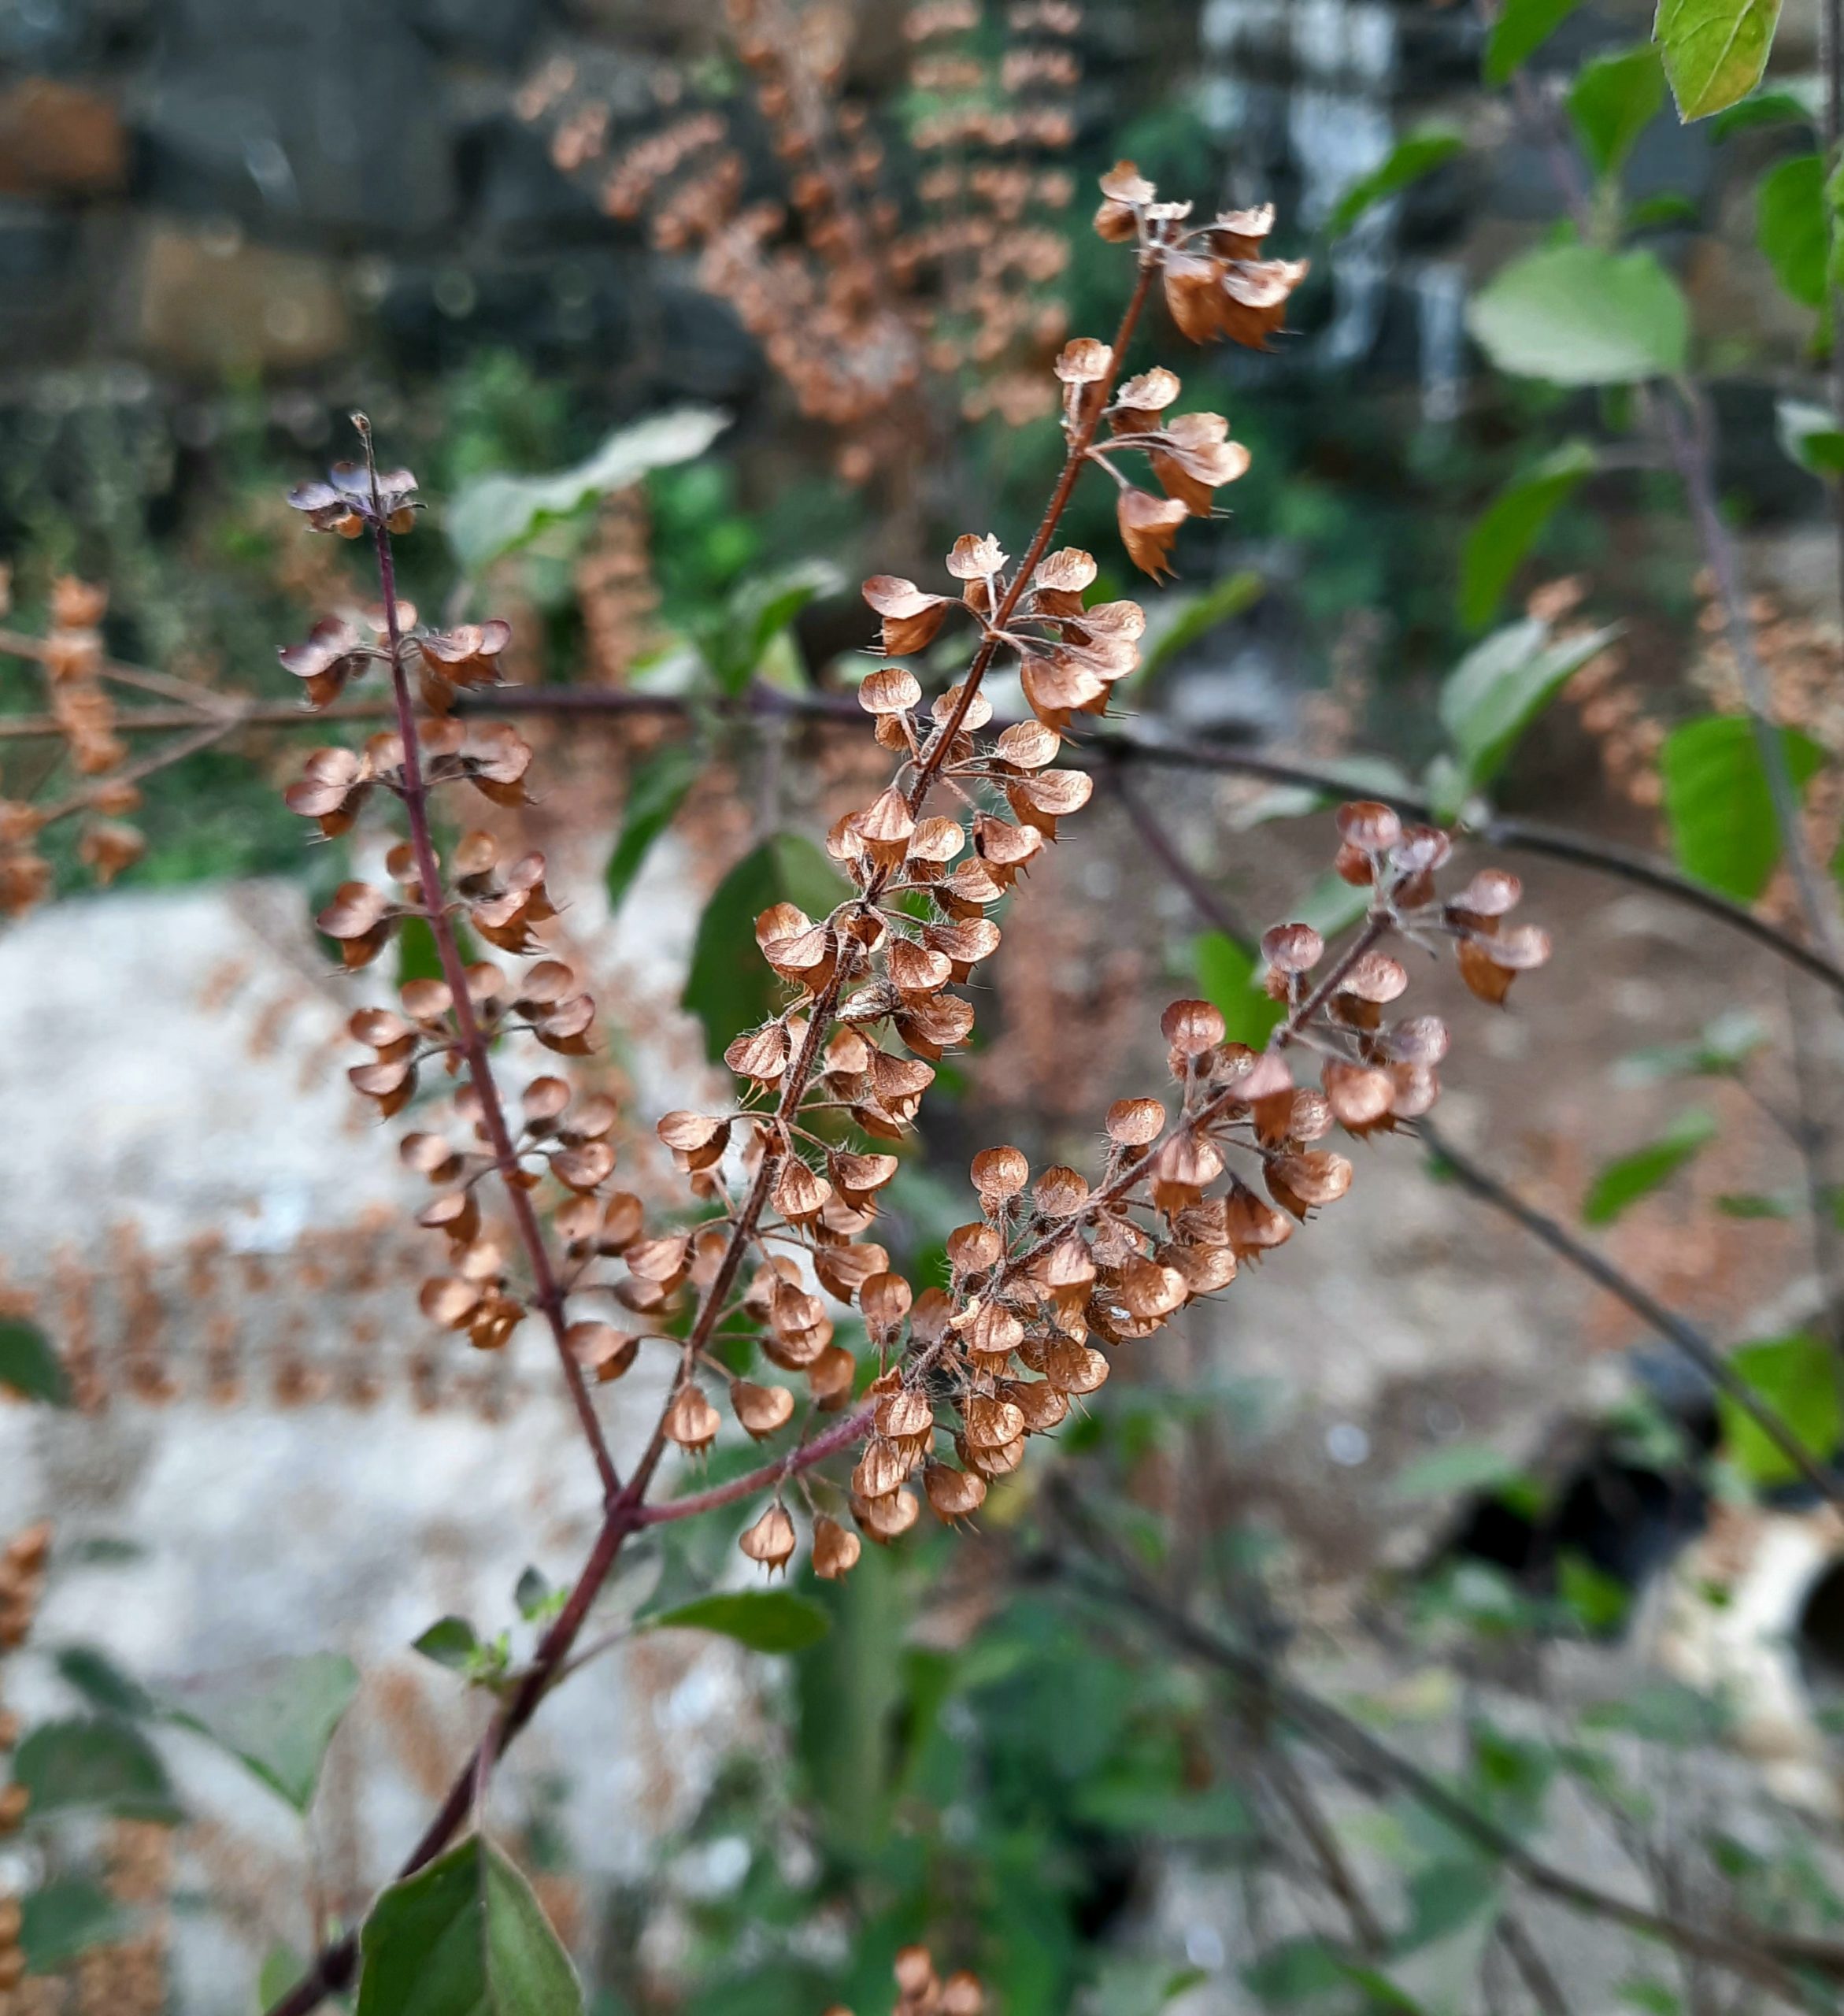 Seeds of basil plant